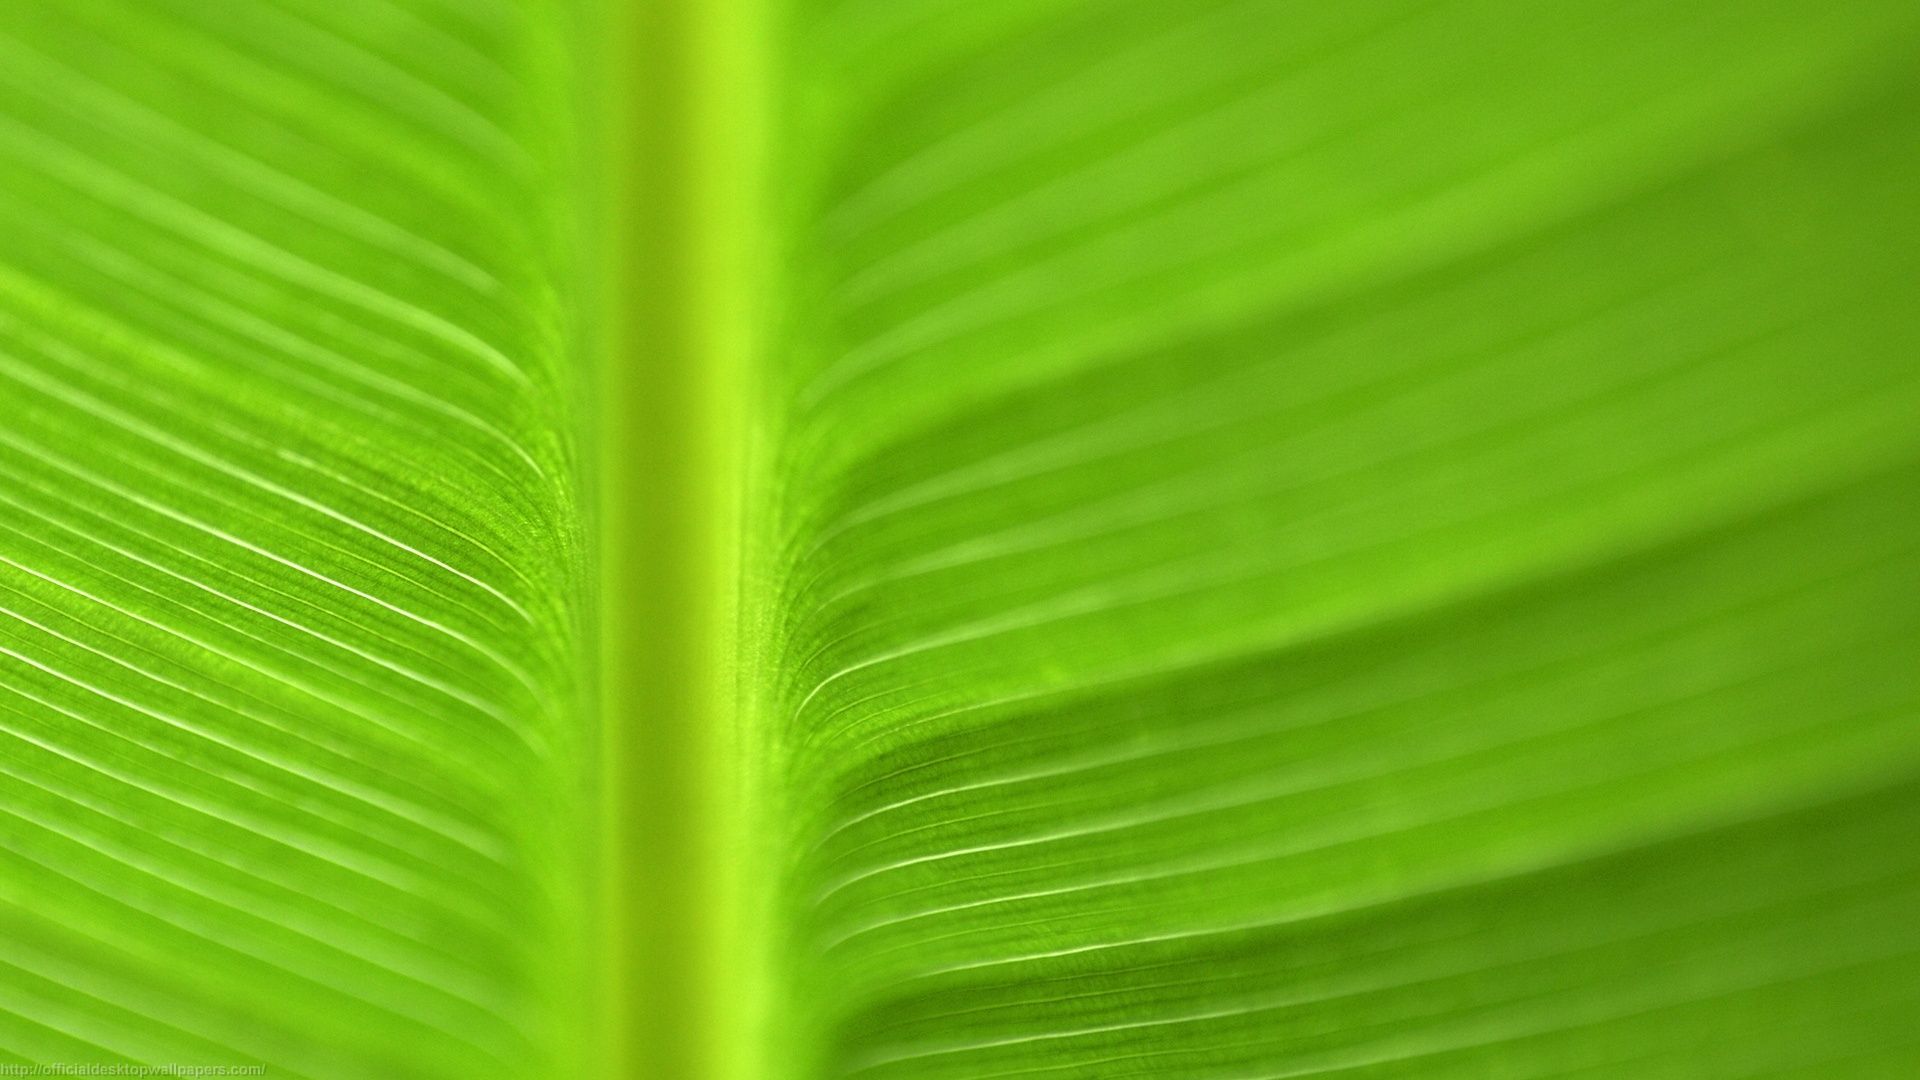  Banana  Leaf  Backgrounds  PixelsTalk Net